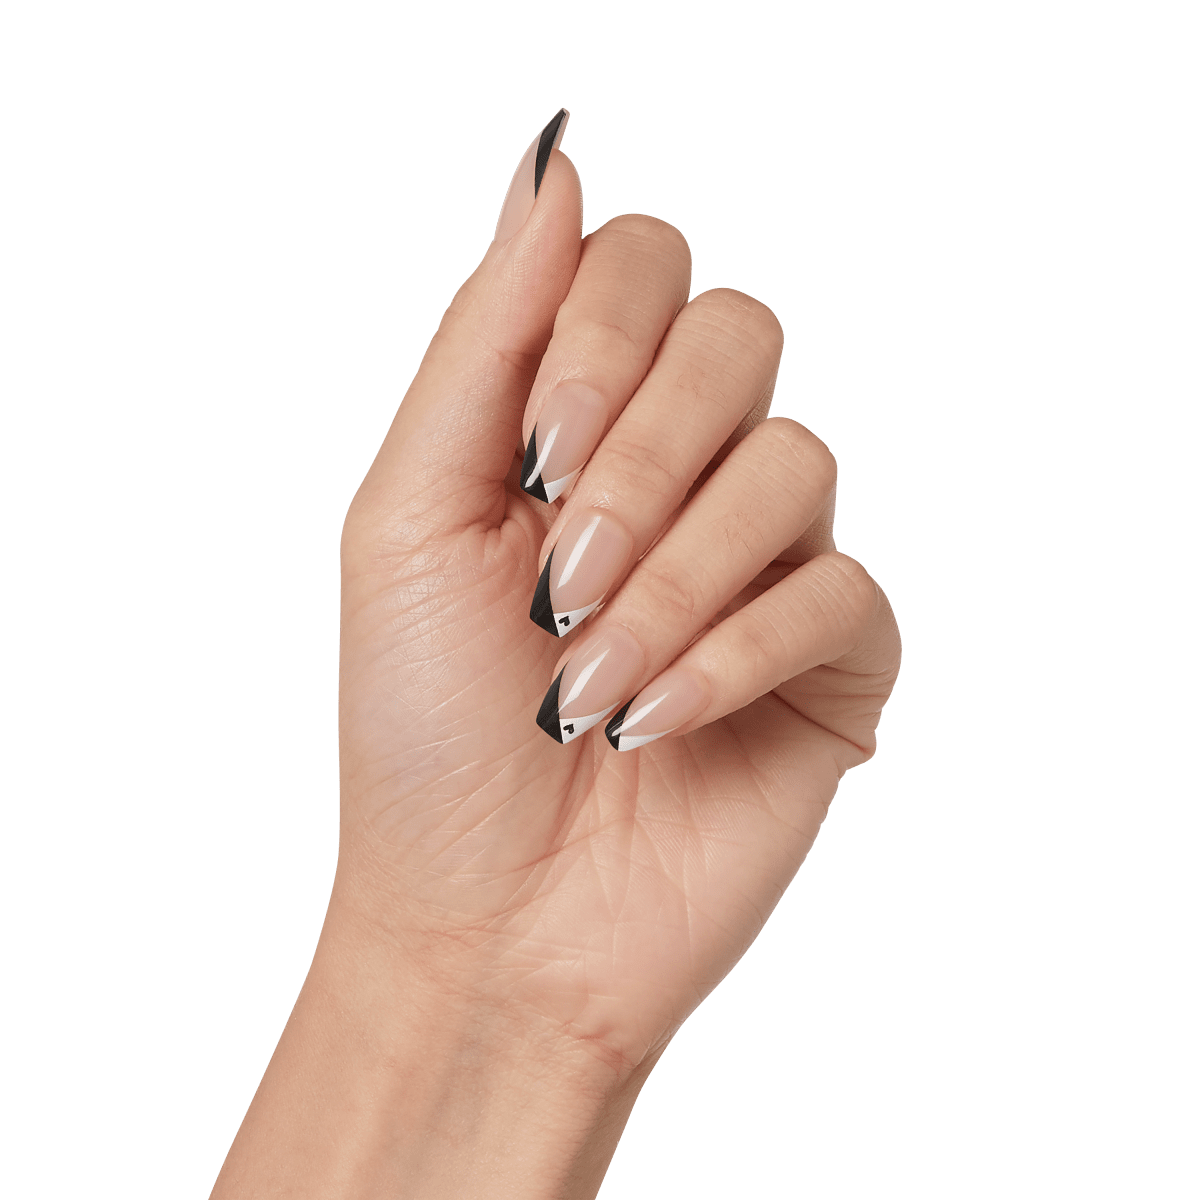 Salon Design Nails - Nailed it